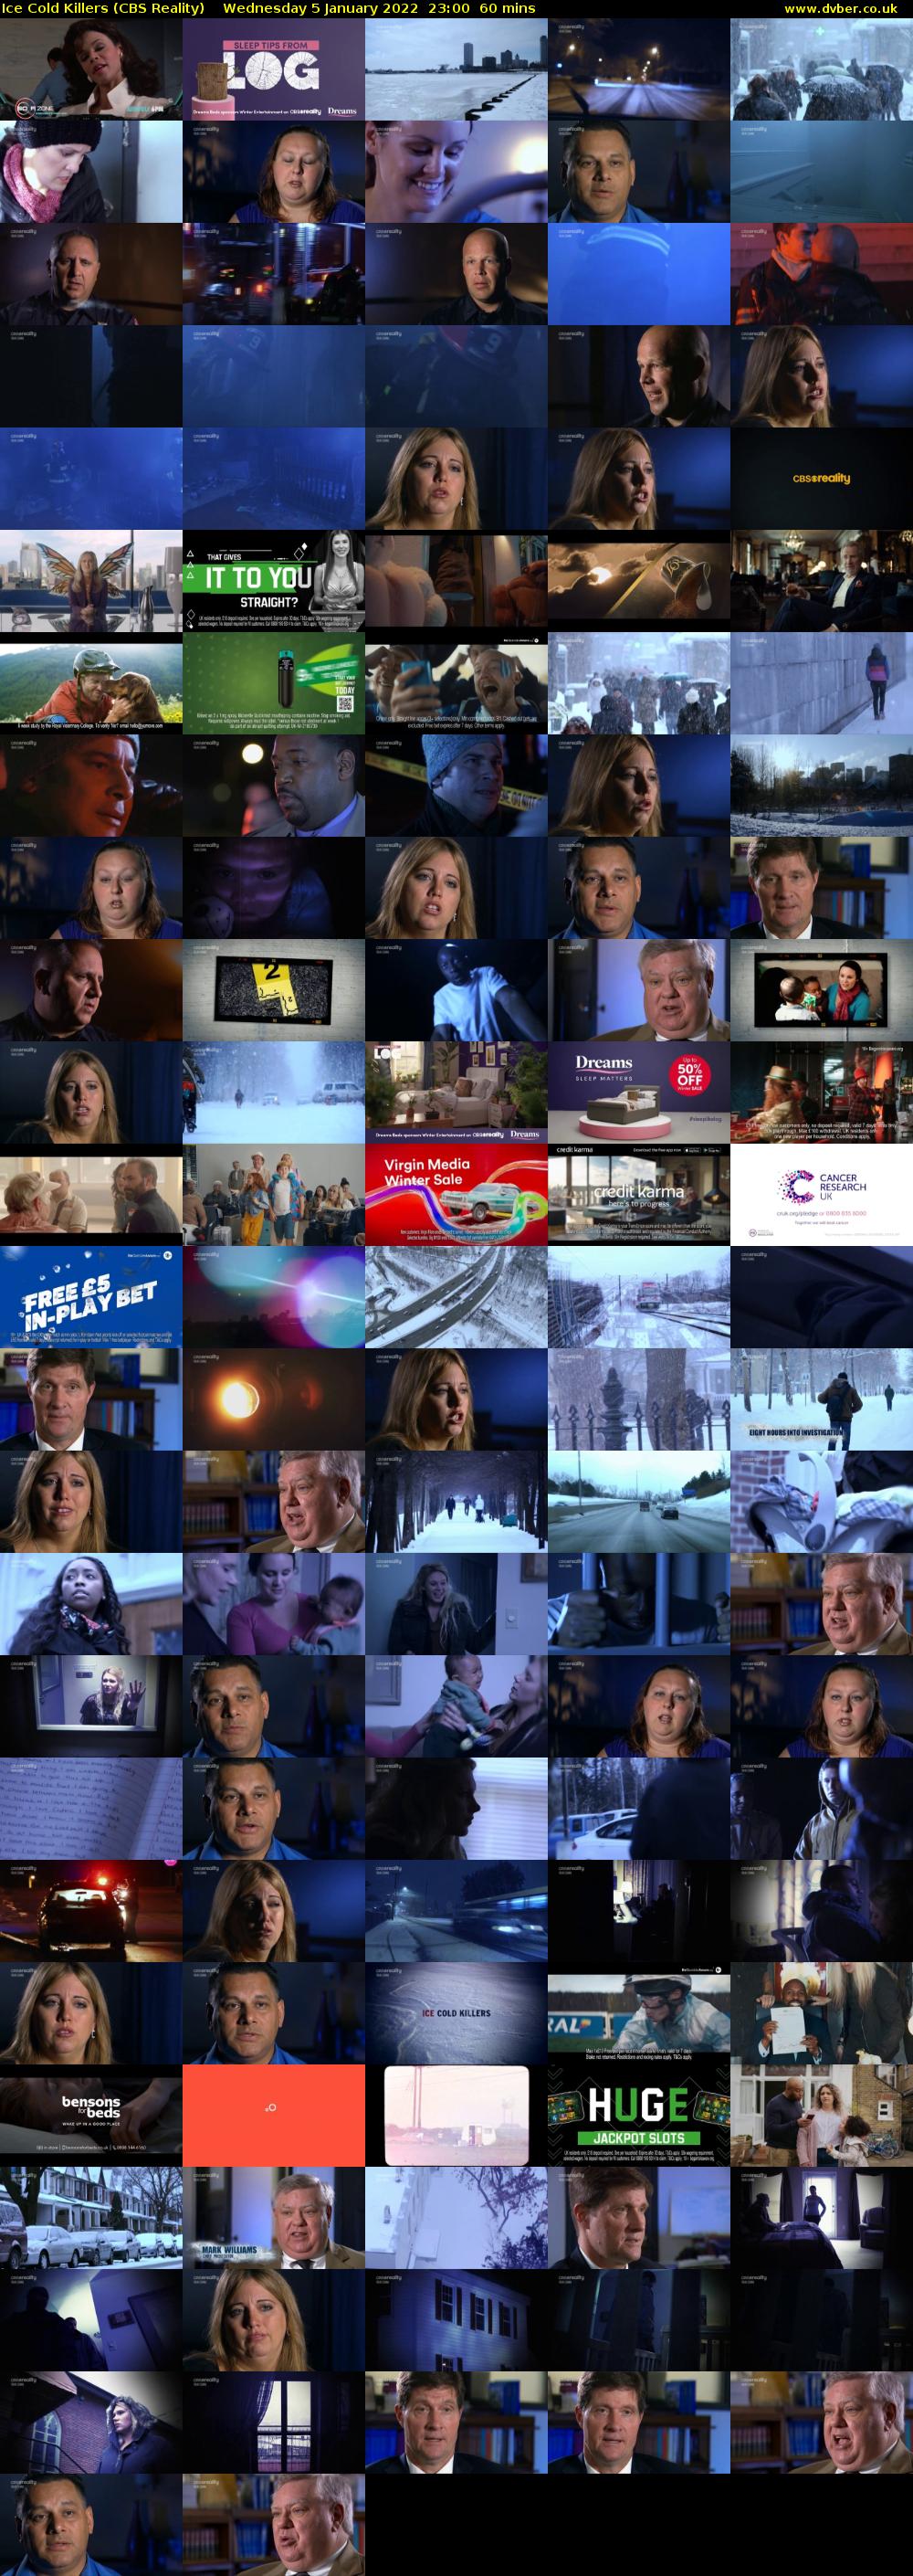 Ice Cold Killers (CBS Reality) Wednesday 5 January 2022 23:00 - 00:00